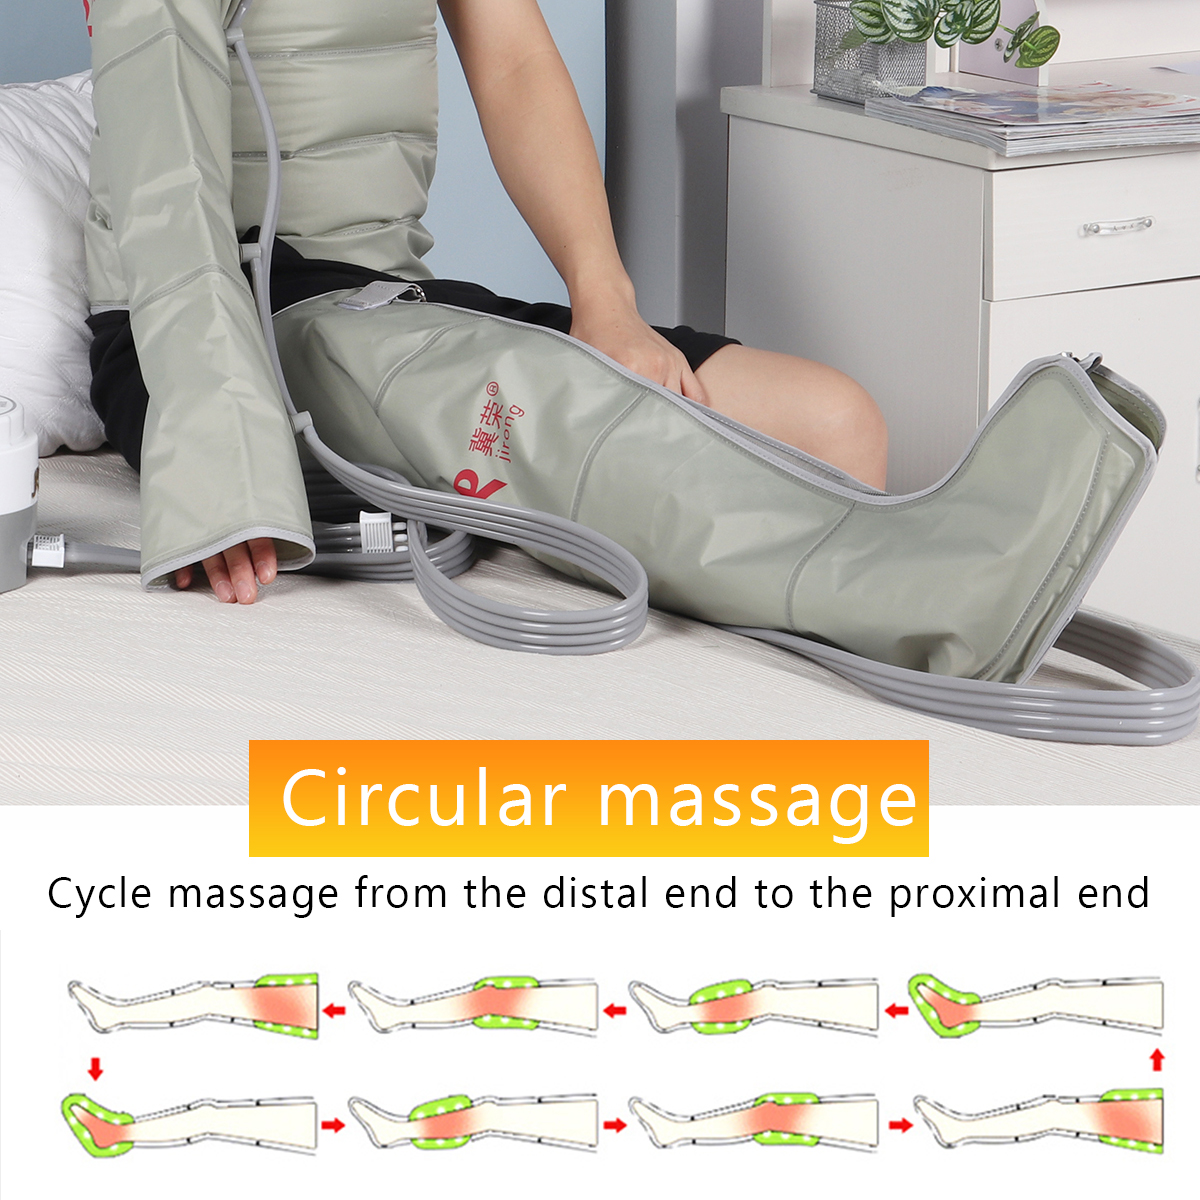 Electric-Air-Compression-Leg-Massager-Leg-Wraps-Foot-Ankles-Calf-Massage-Machine-Promote-Blood-Circu-1844994-2